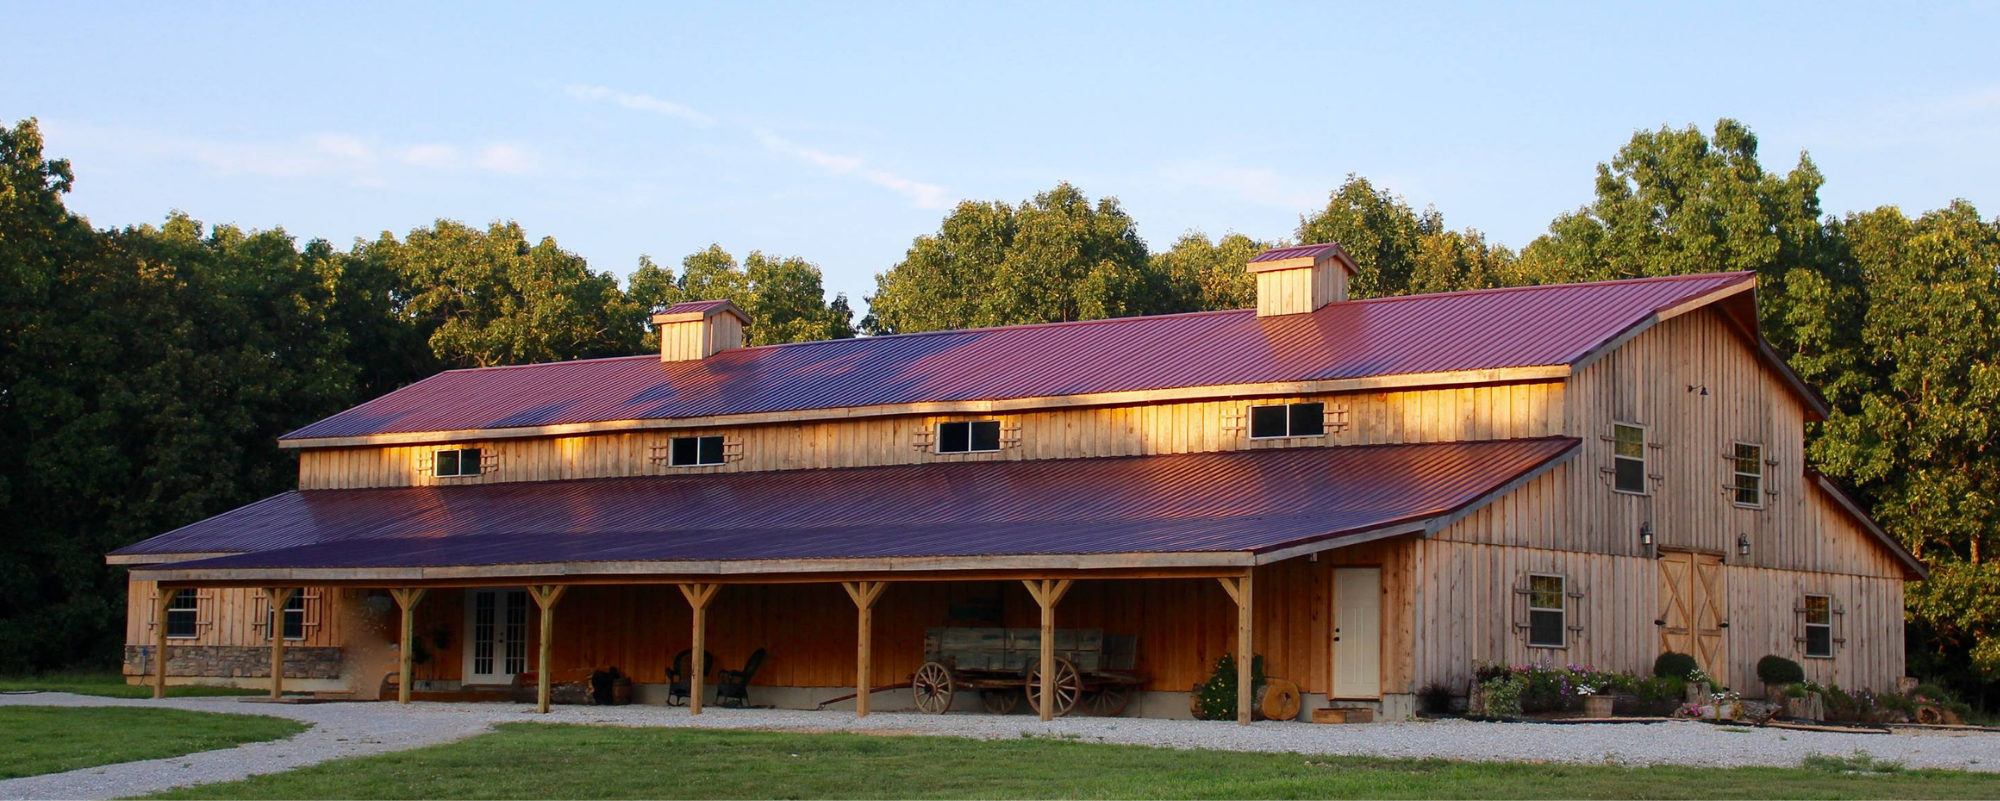 beautiful rustic barn